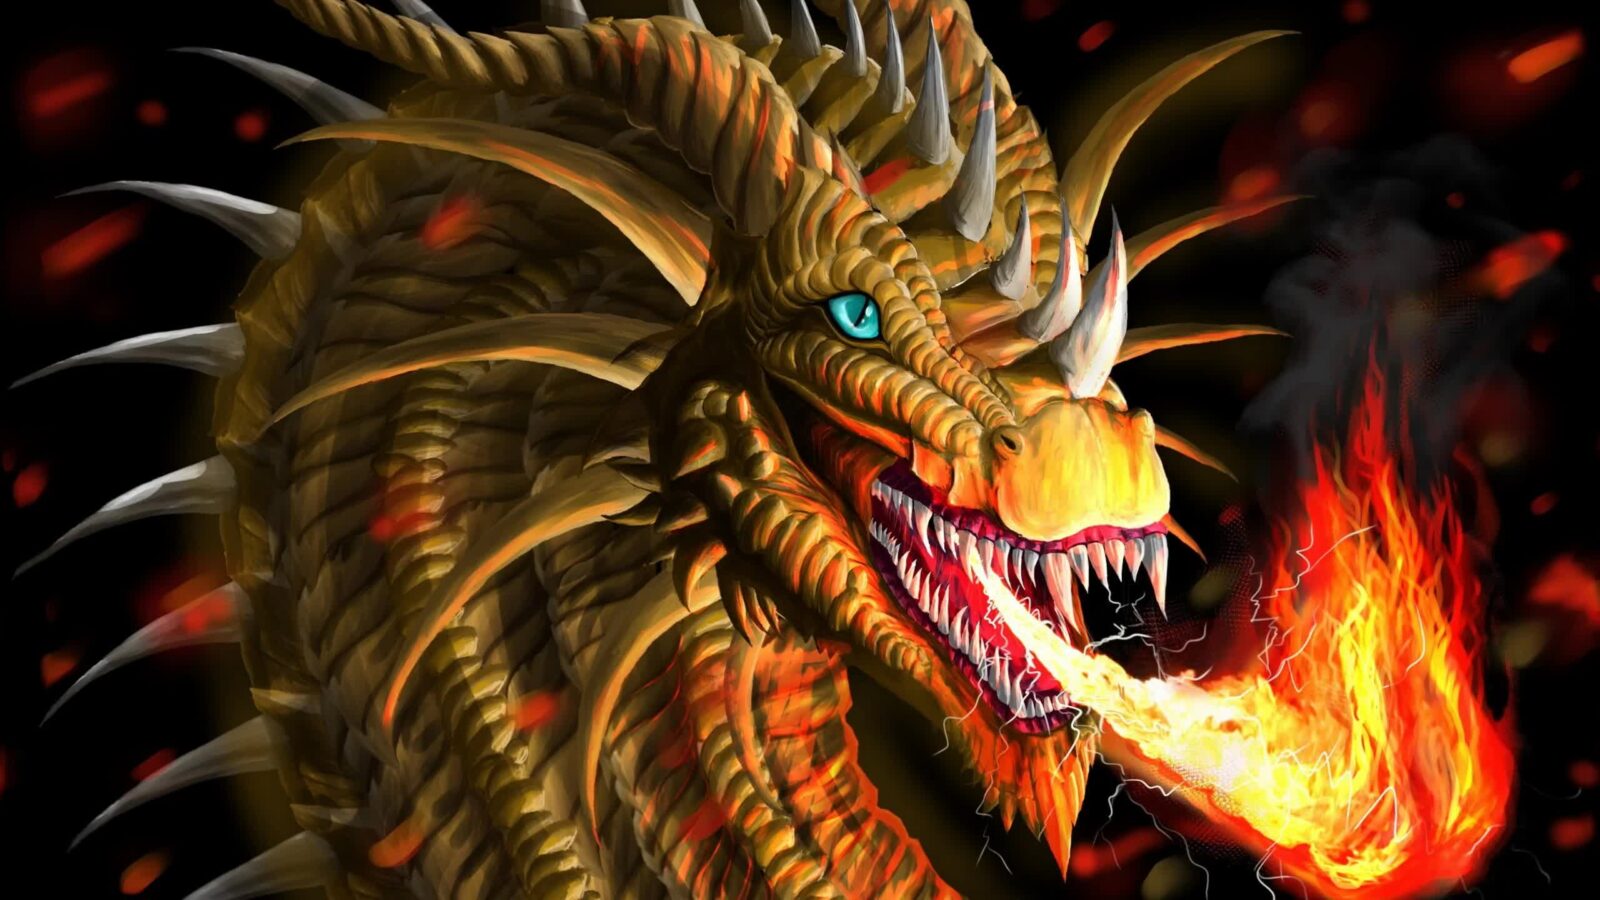 LiveWallpapers4Free.com | Fantasy Creatures Dragon Artwork 2K Quality - Free Live Wallpaper